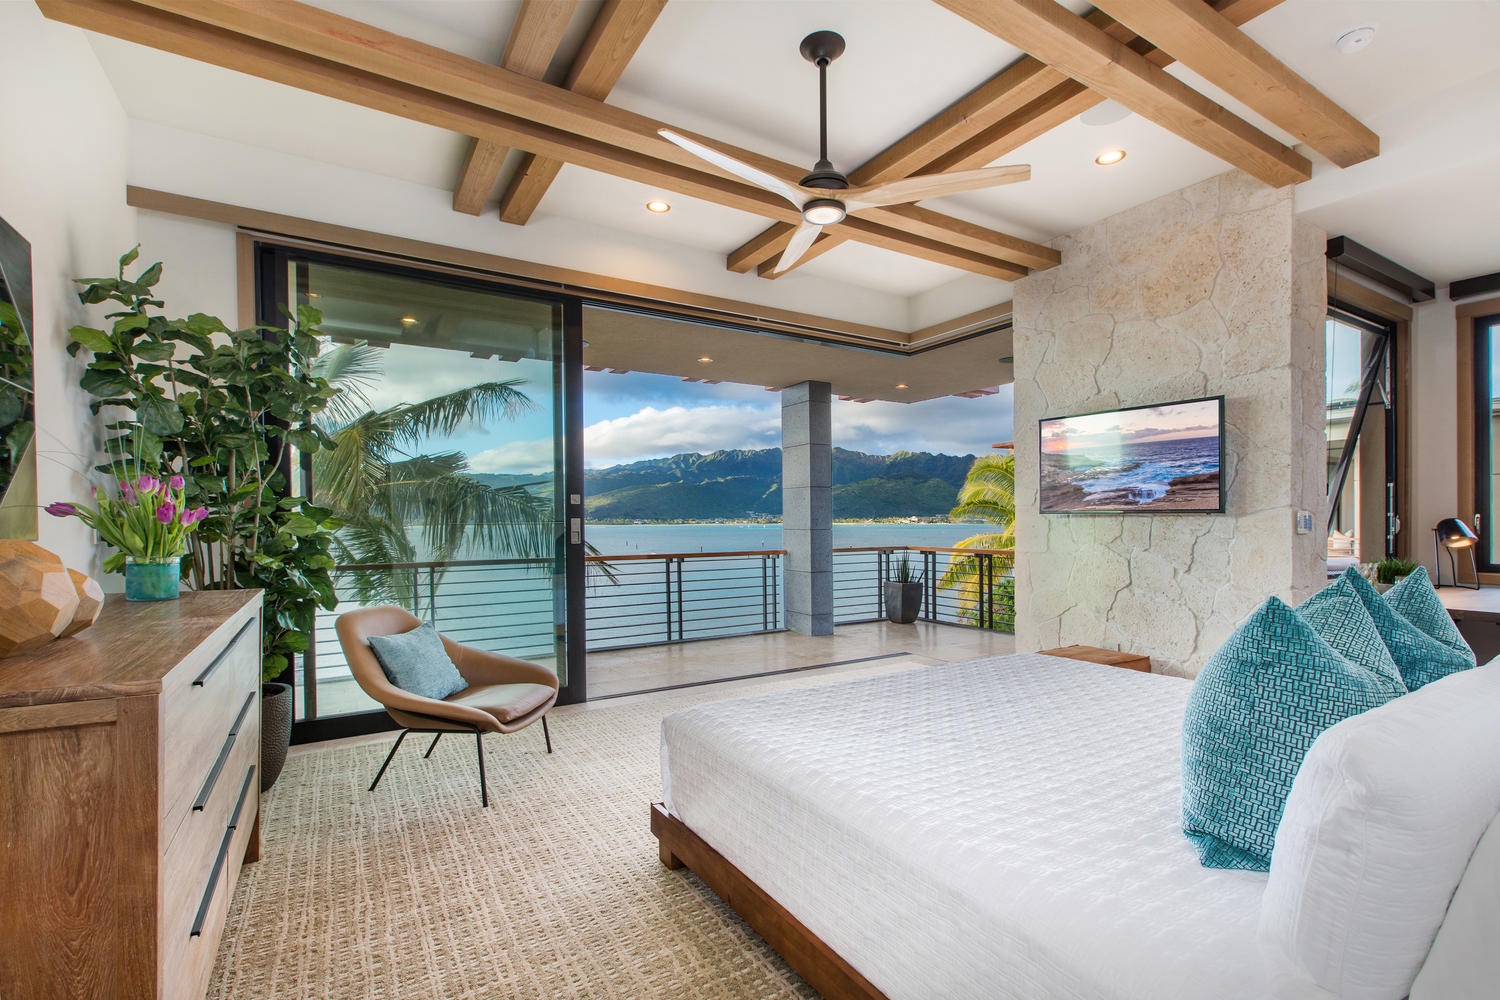 Honolulu Vacation Rentals, Maunalua Bay Estate - Second primary bedroom suite.